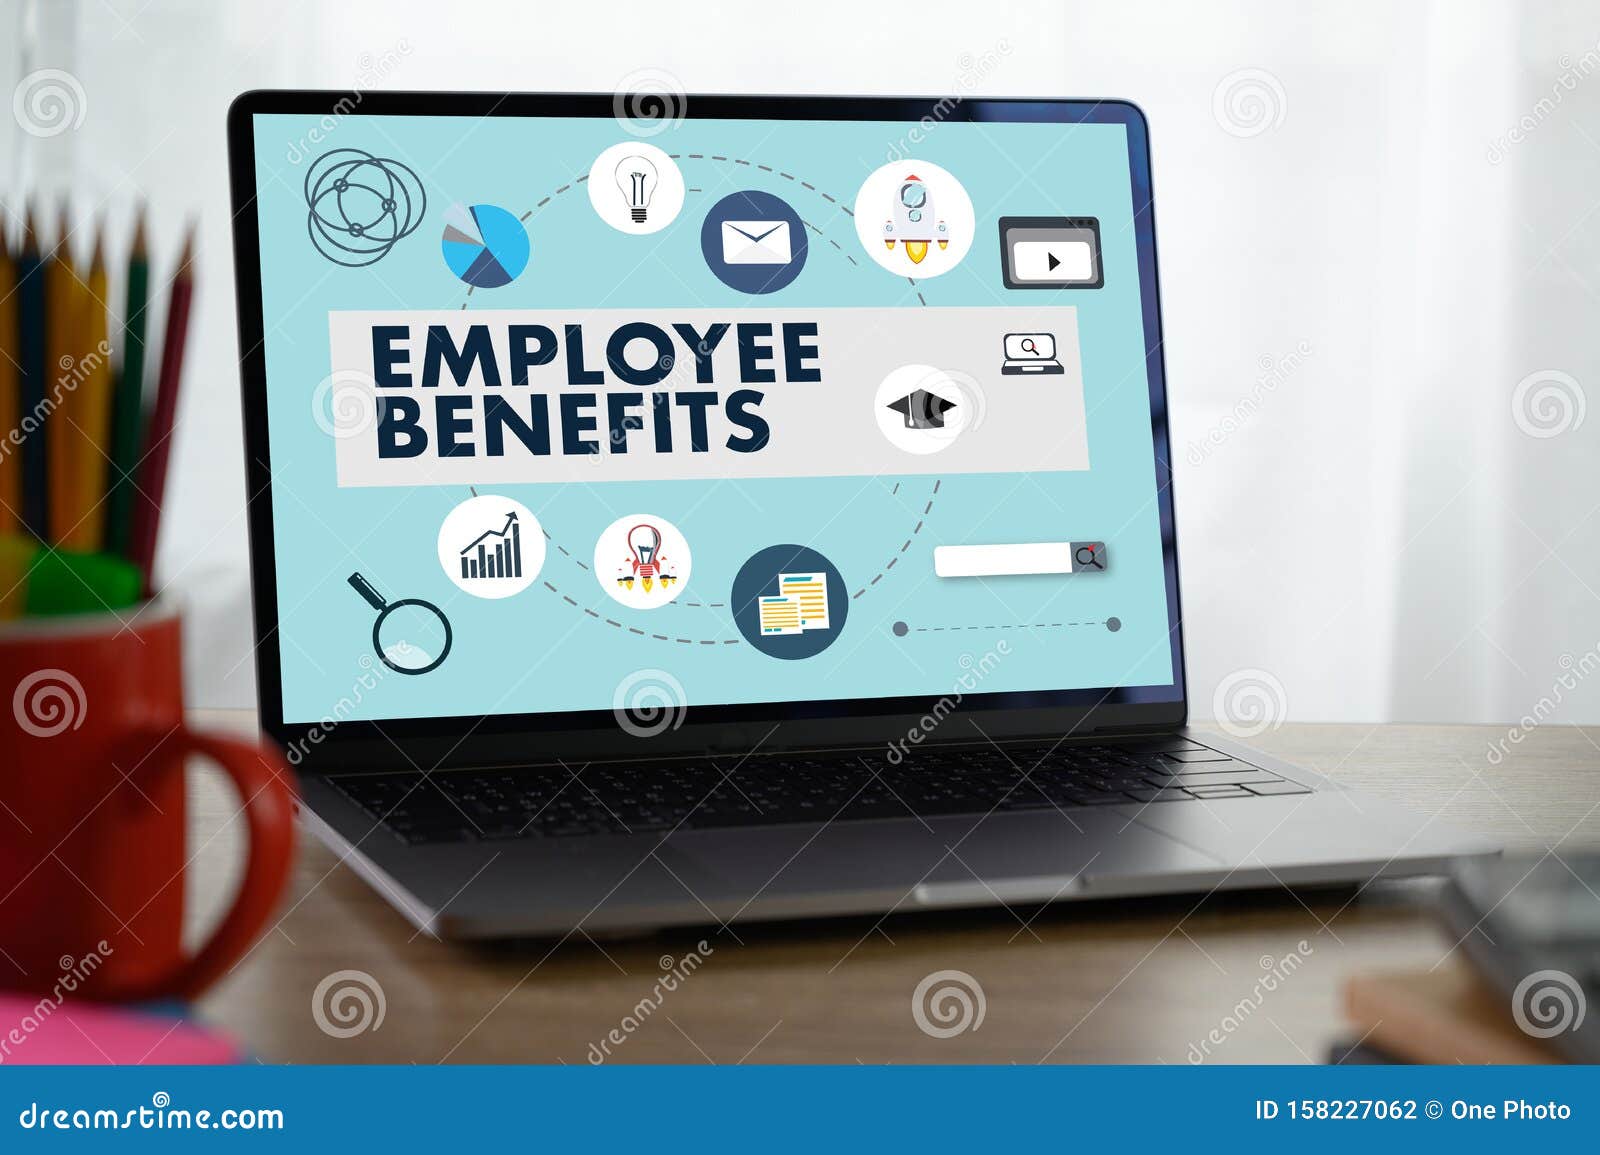 employee benefits man working on tablet technology communication